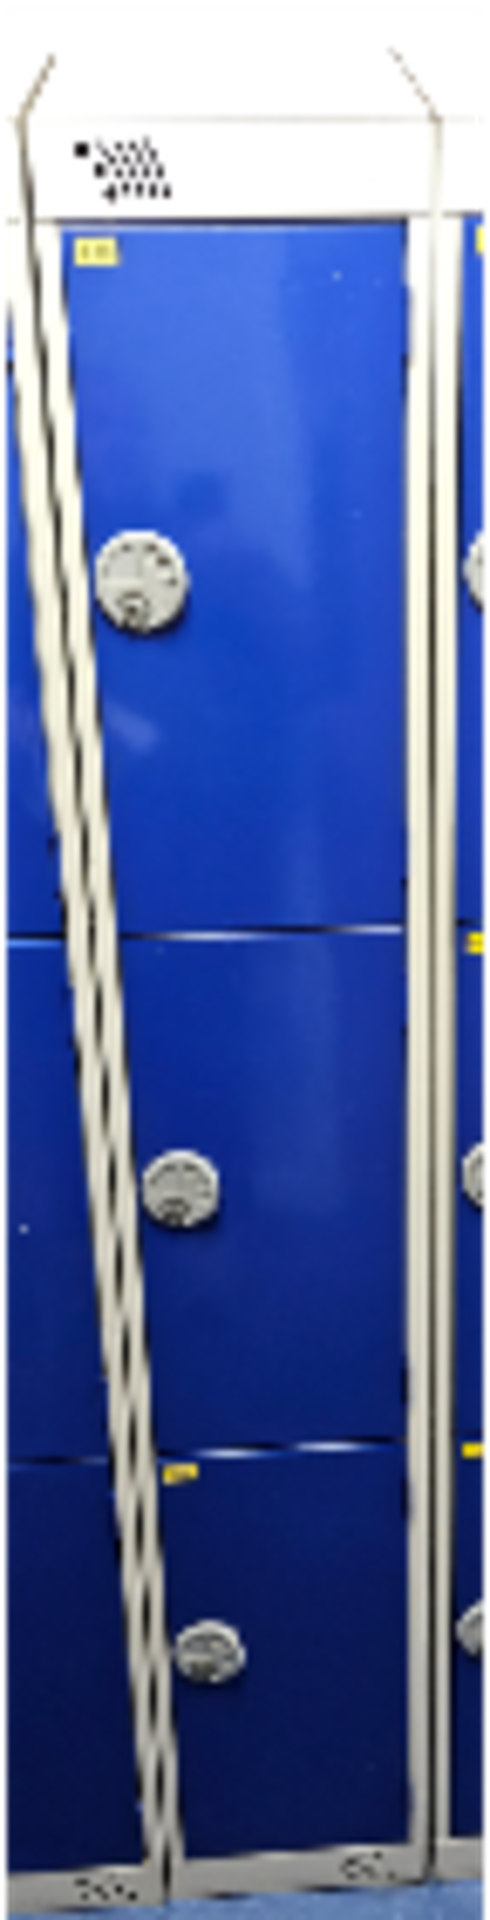 5 x Single Lockers (3 compartments per locker)